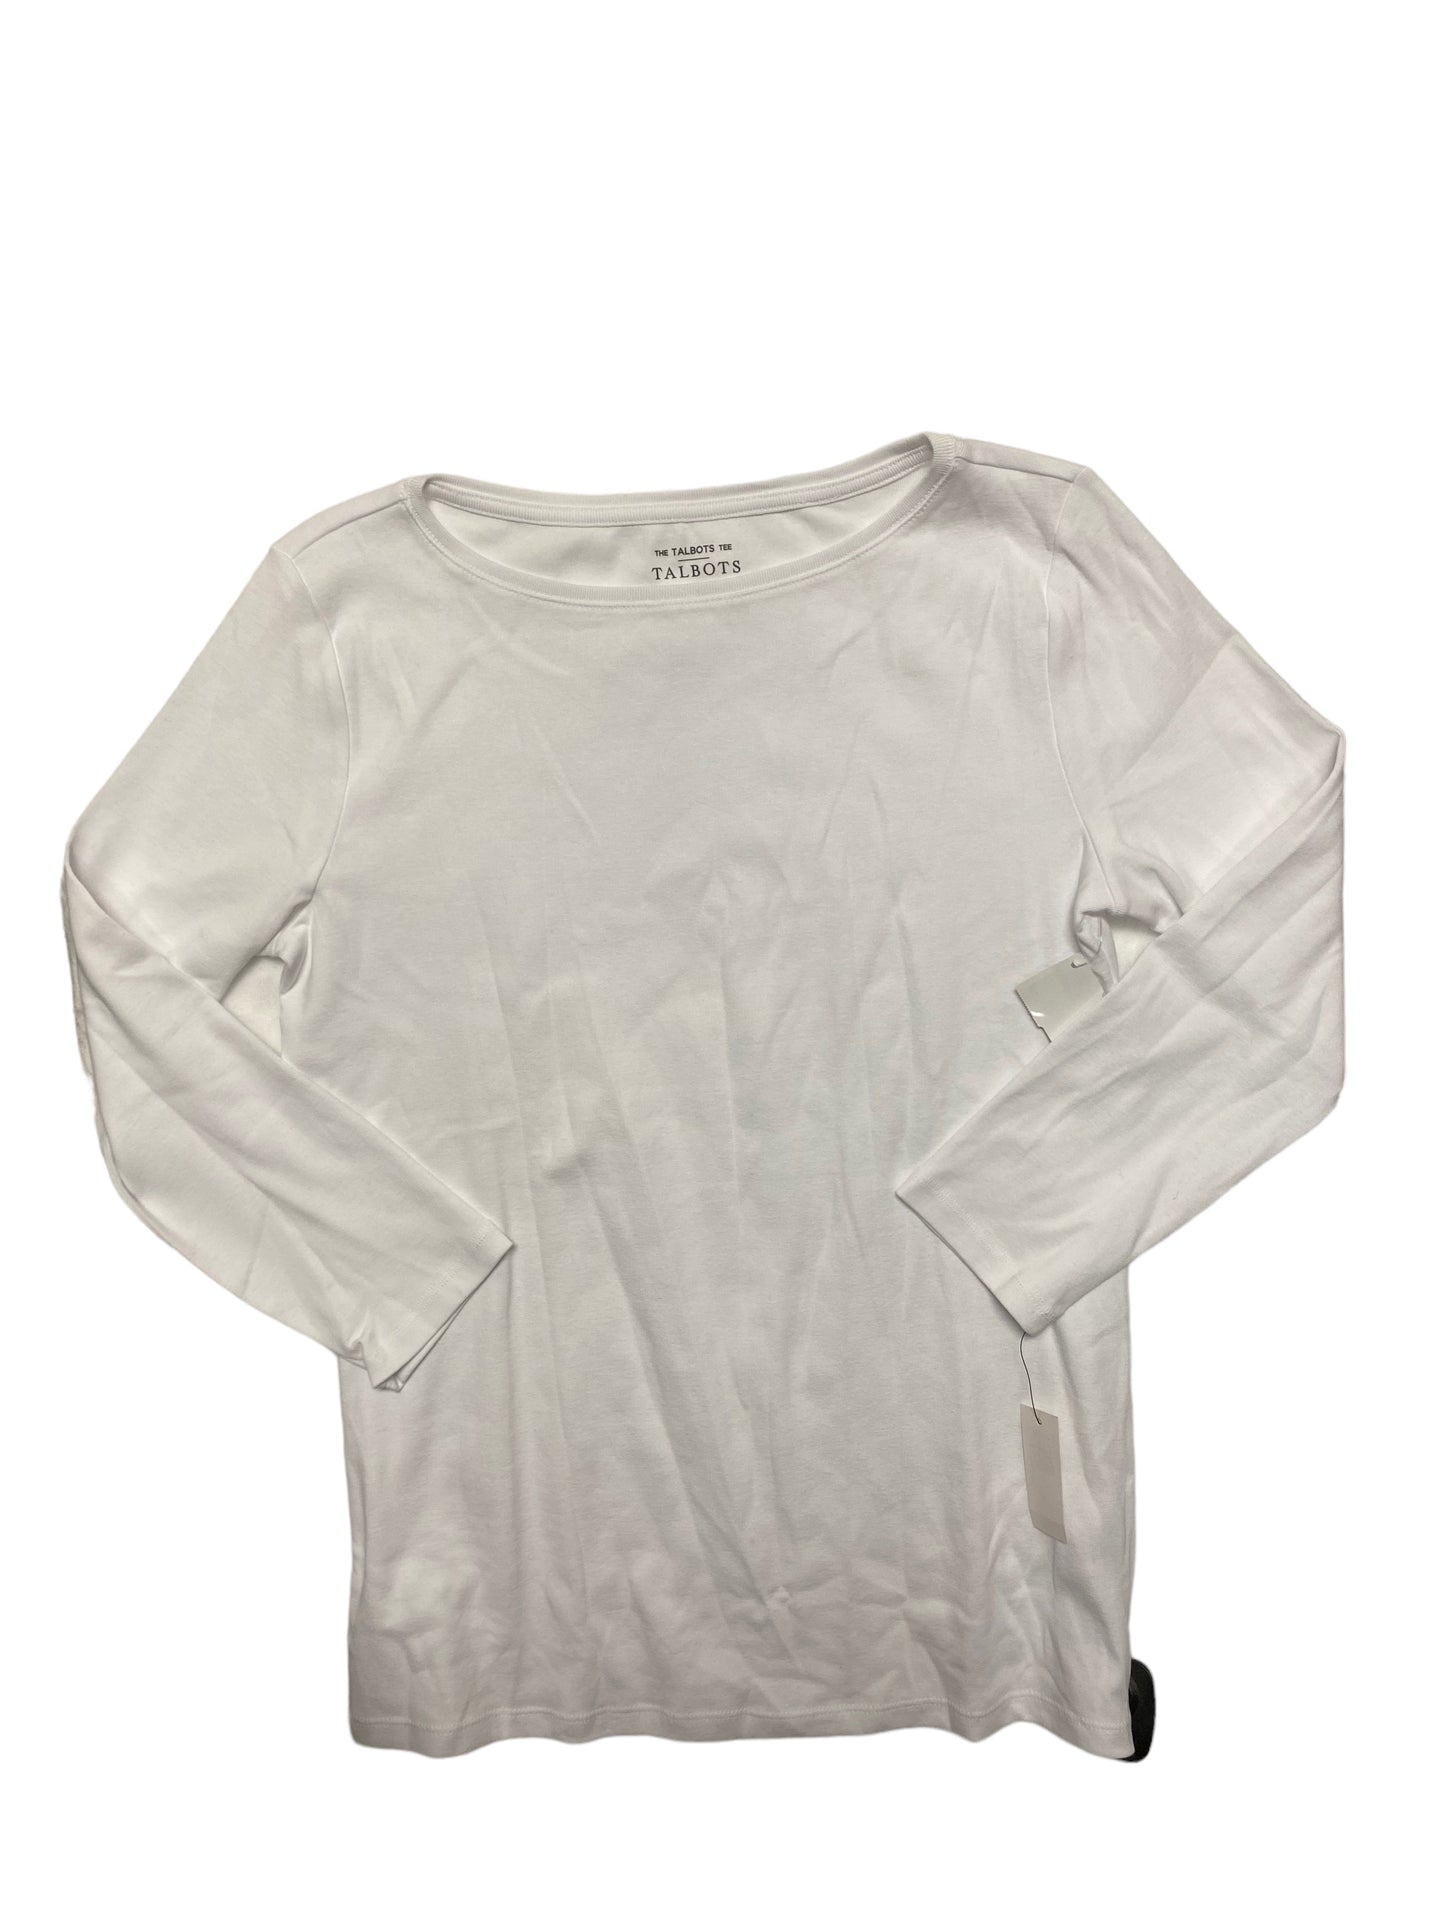 White Top 3/4 Sleeve Basic Talbots, Size S